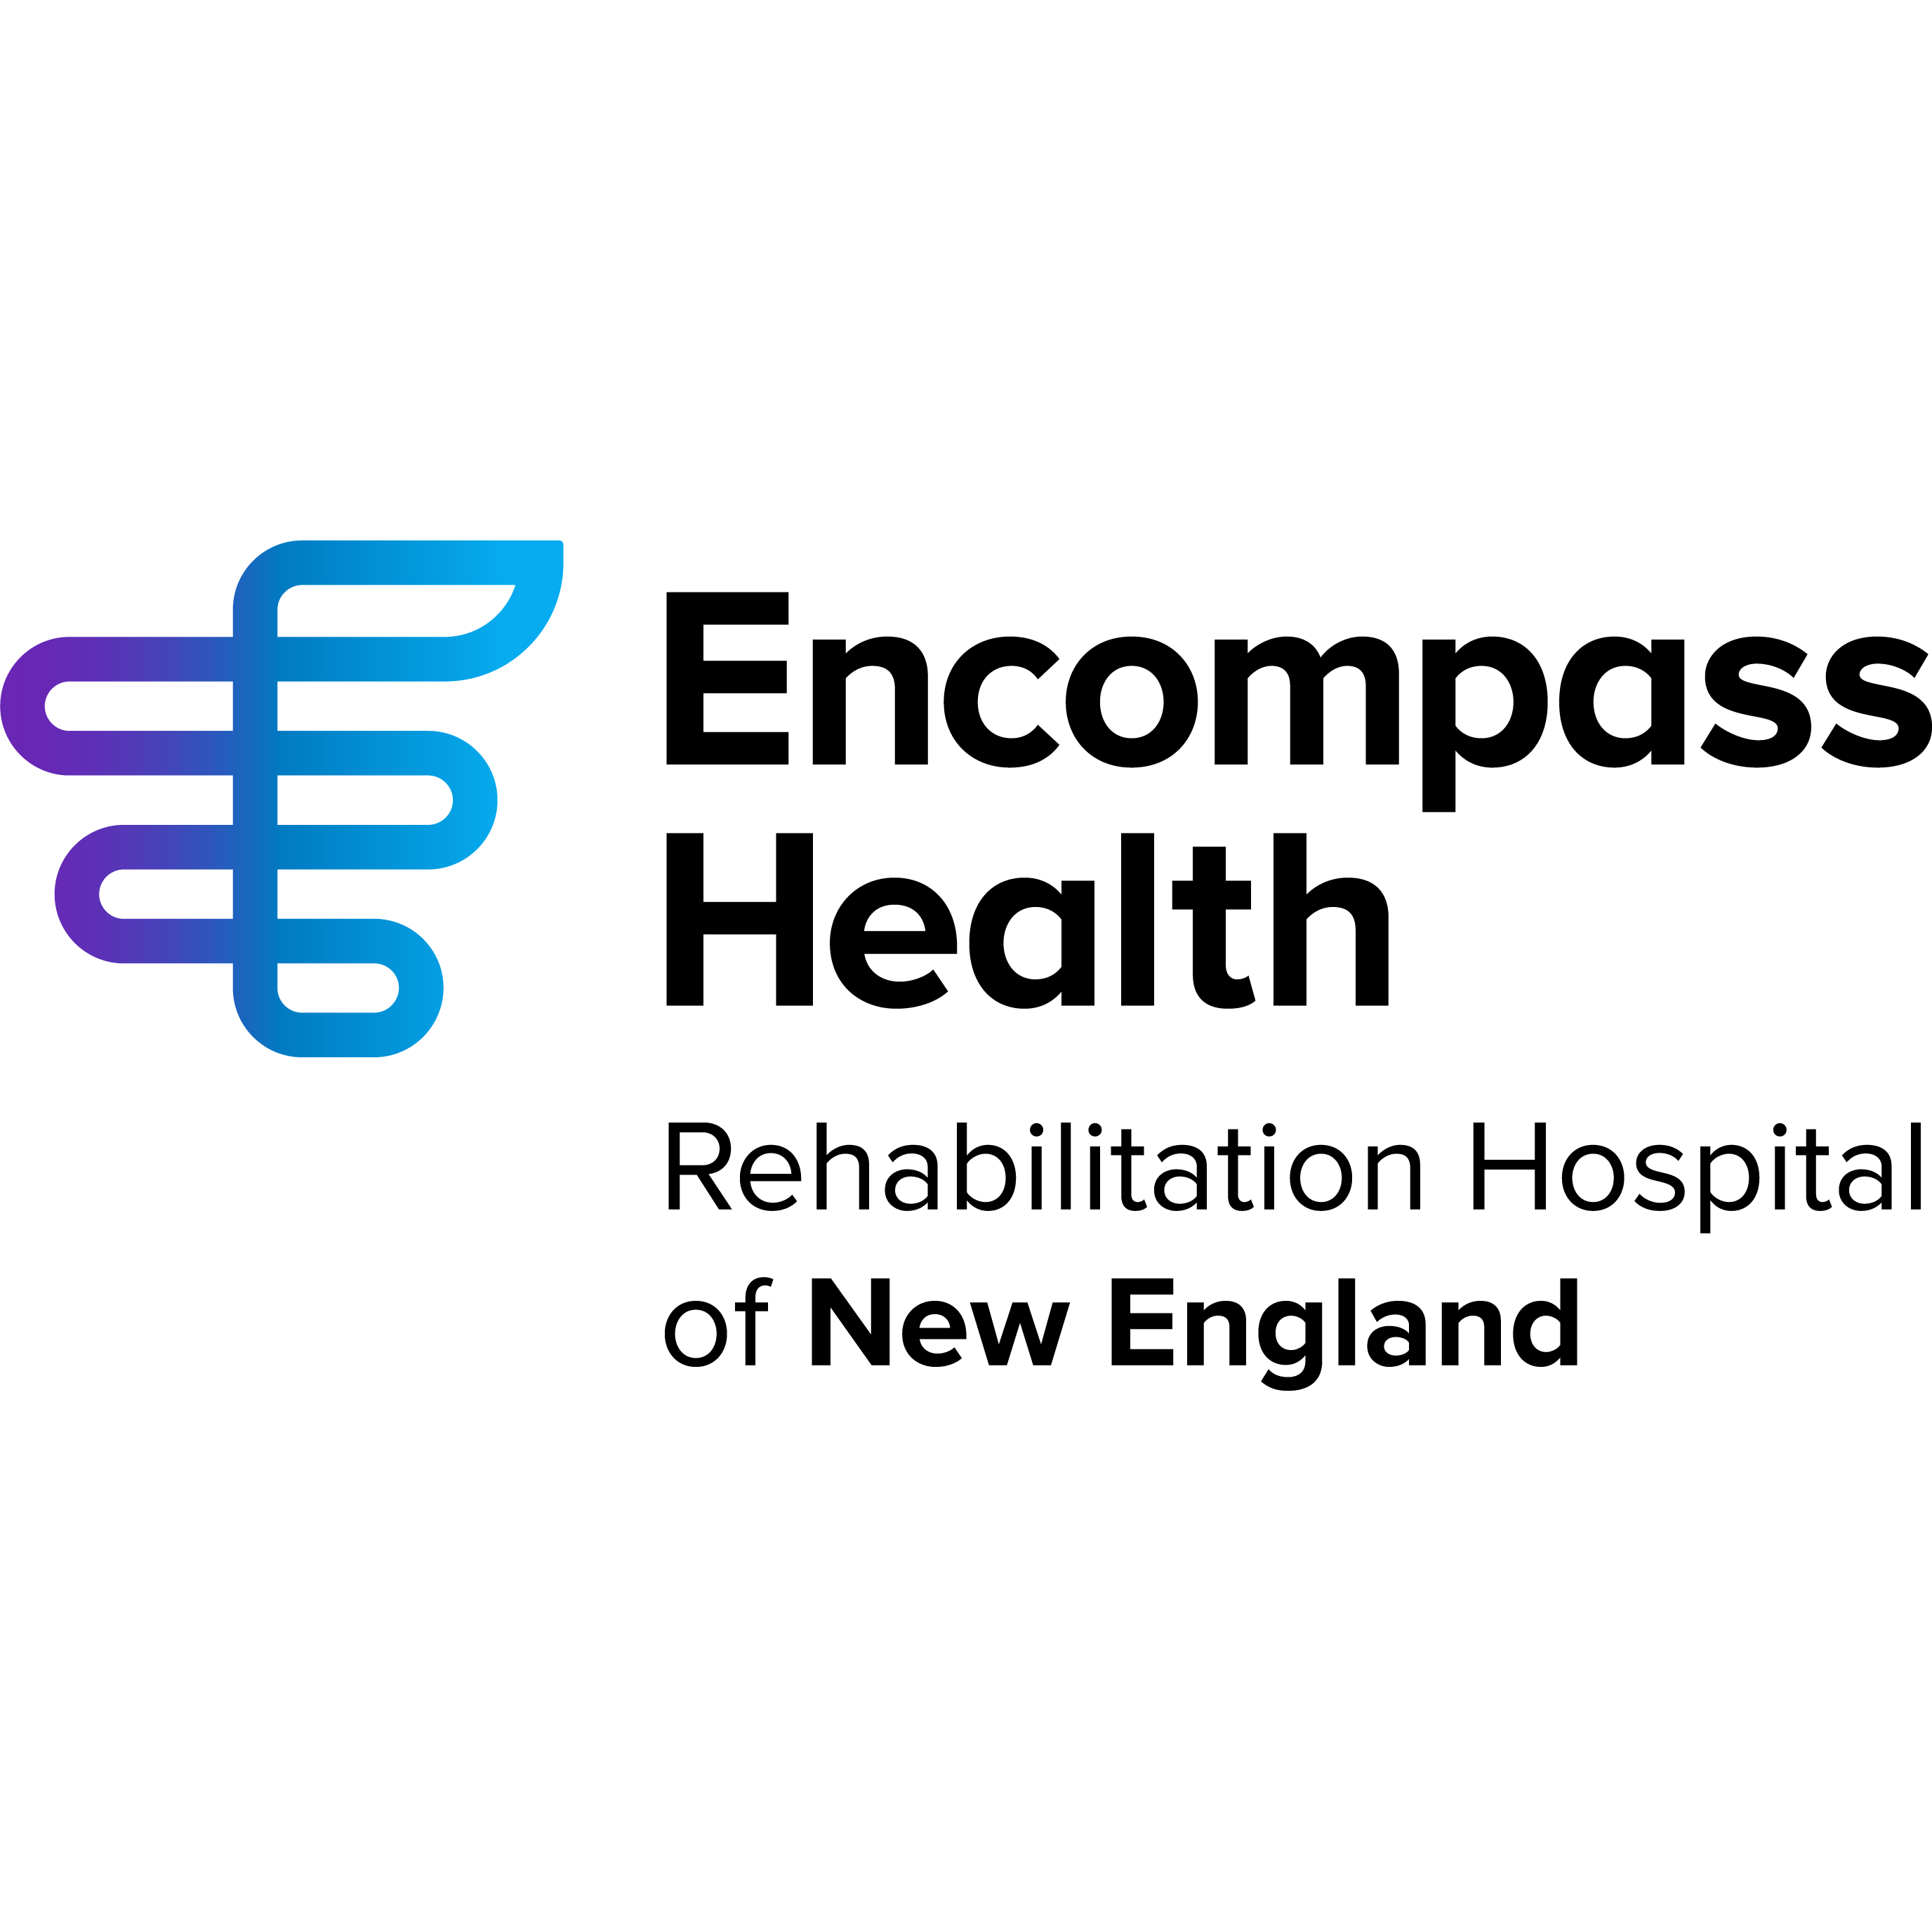 Encompass Health Rehabilitation Hospital of New England